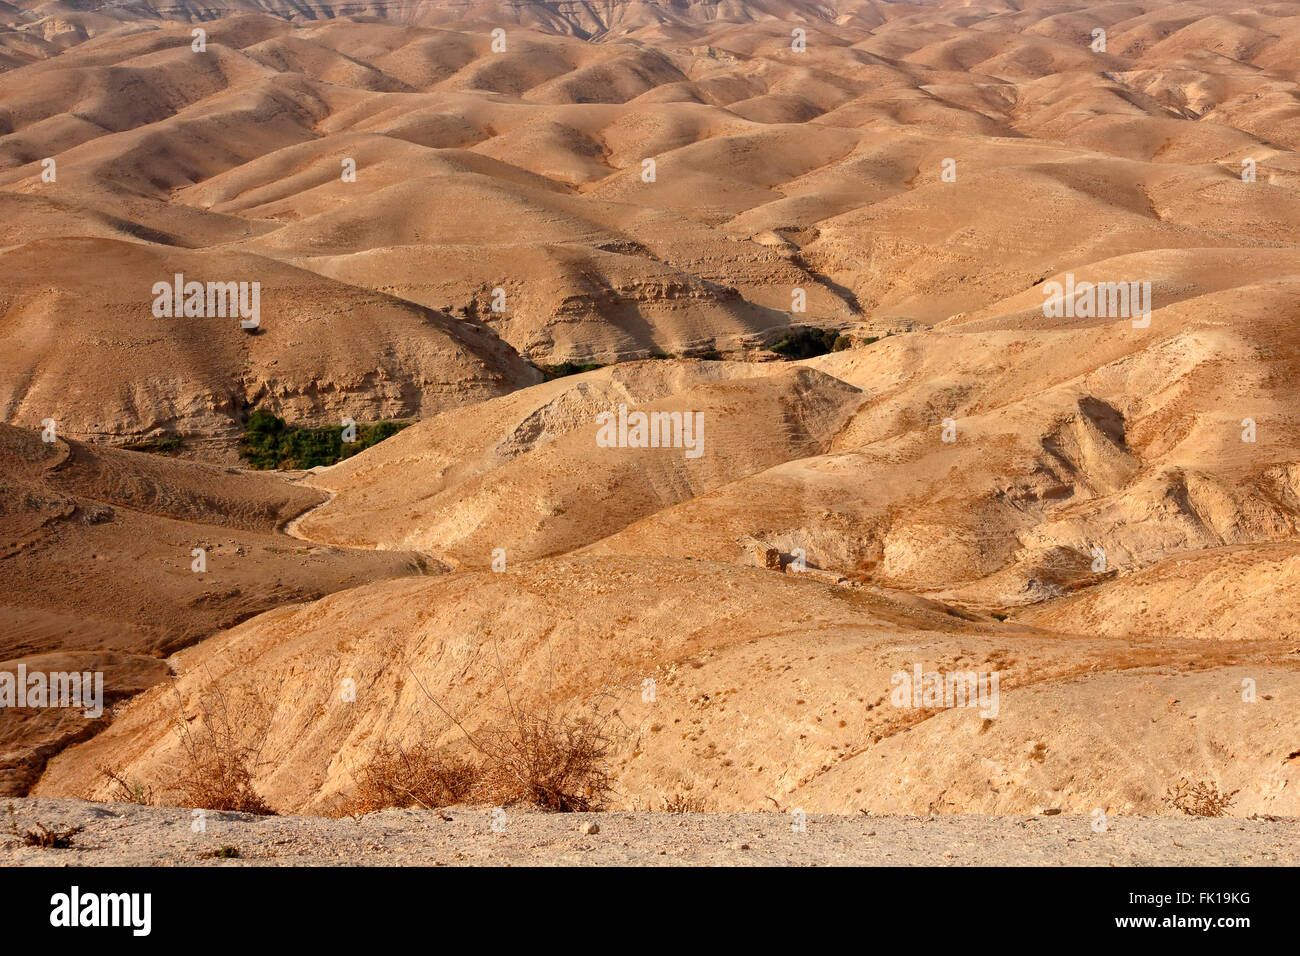 Mountainous Judean desert landscape near Jericho, Israel Stock Photo